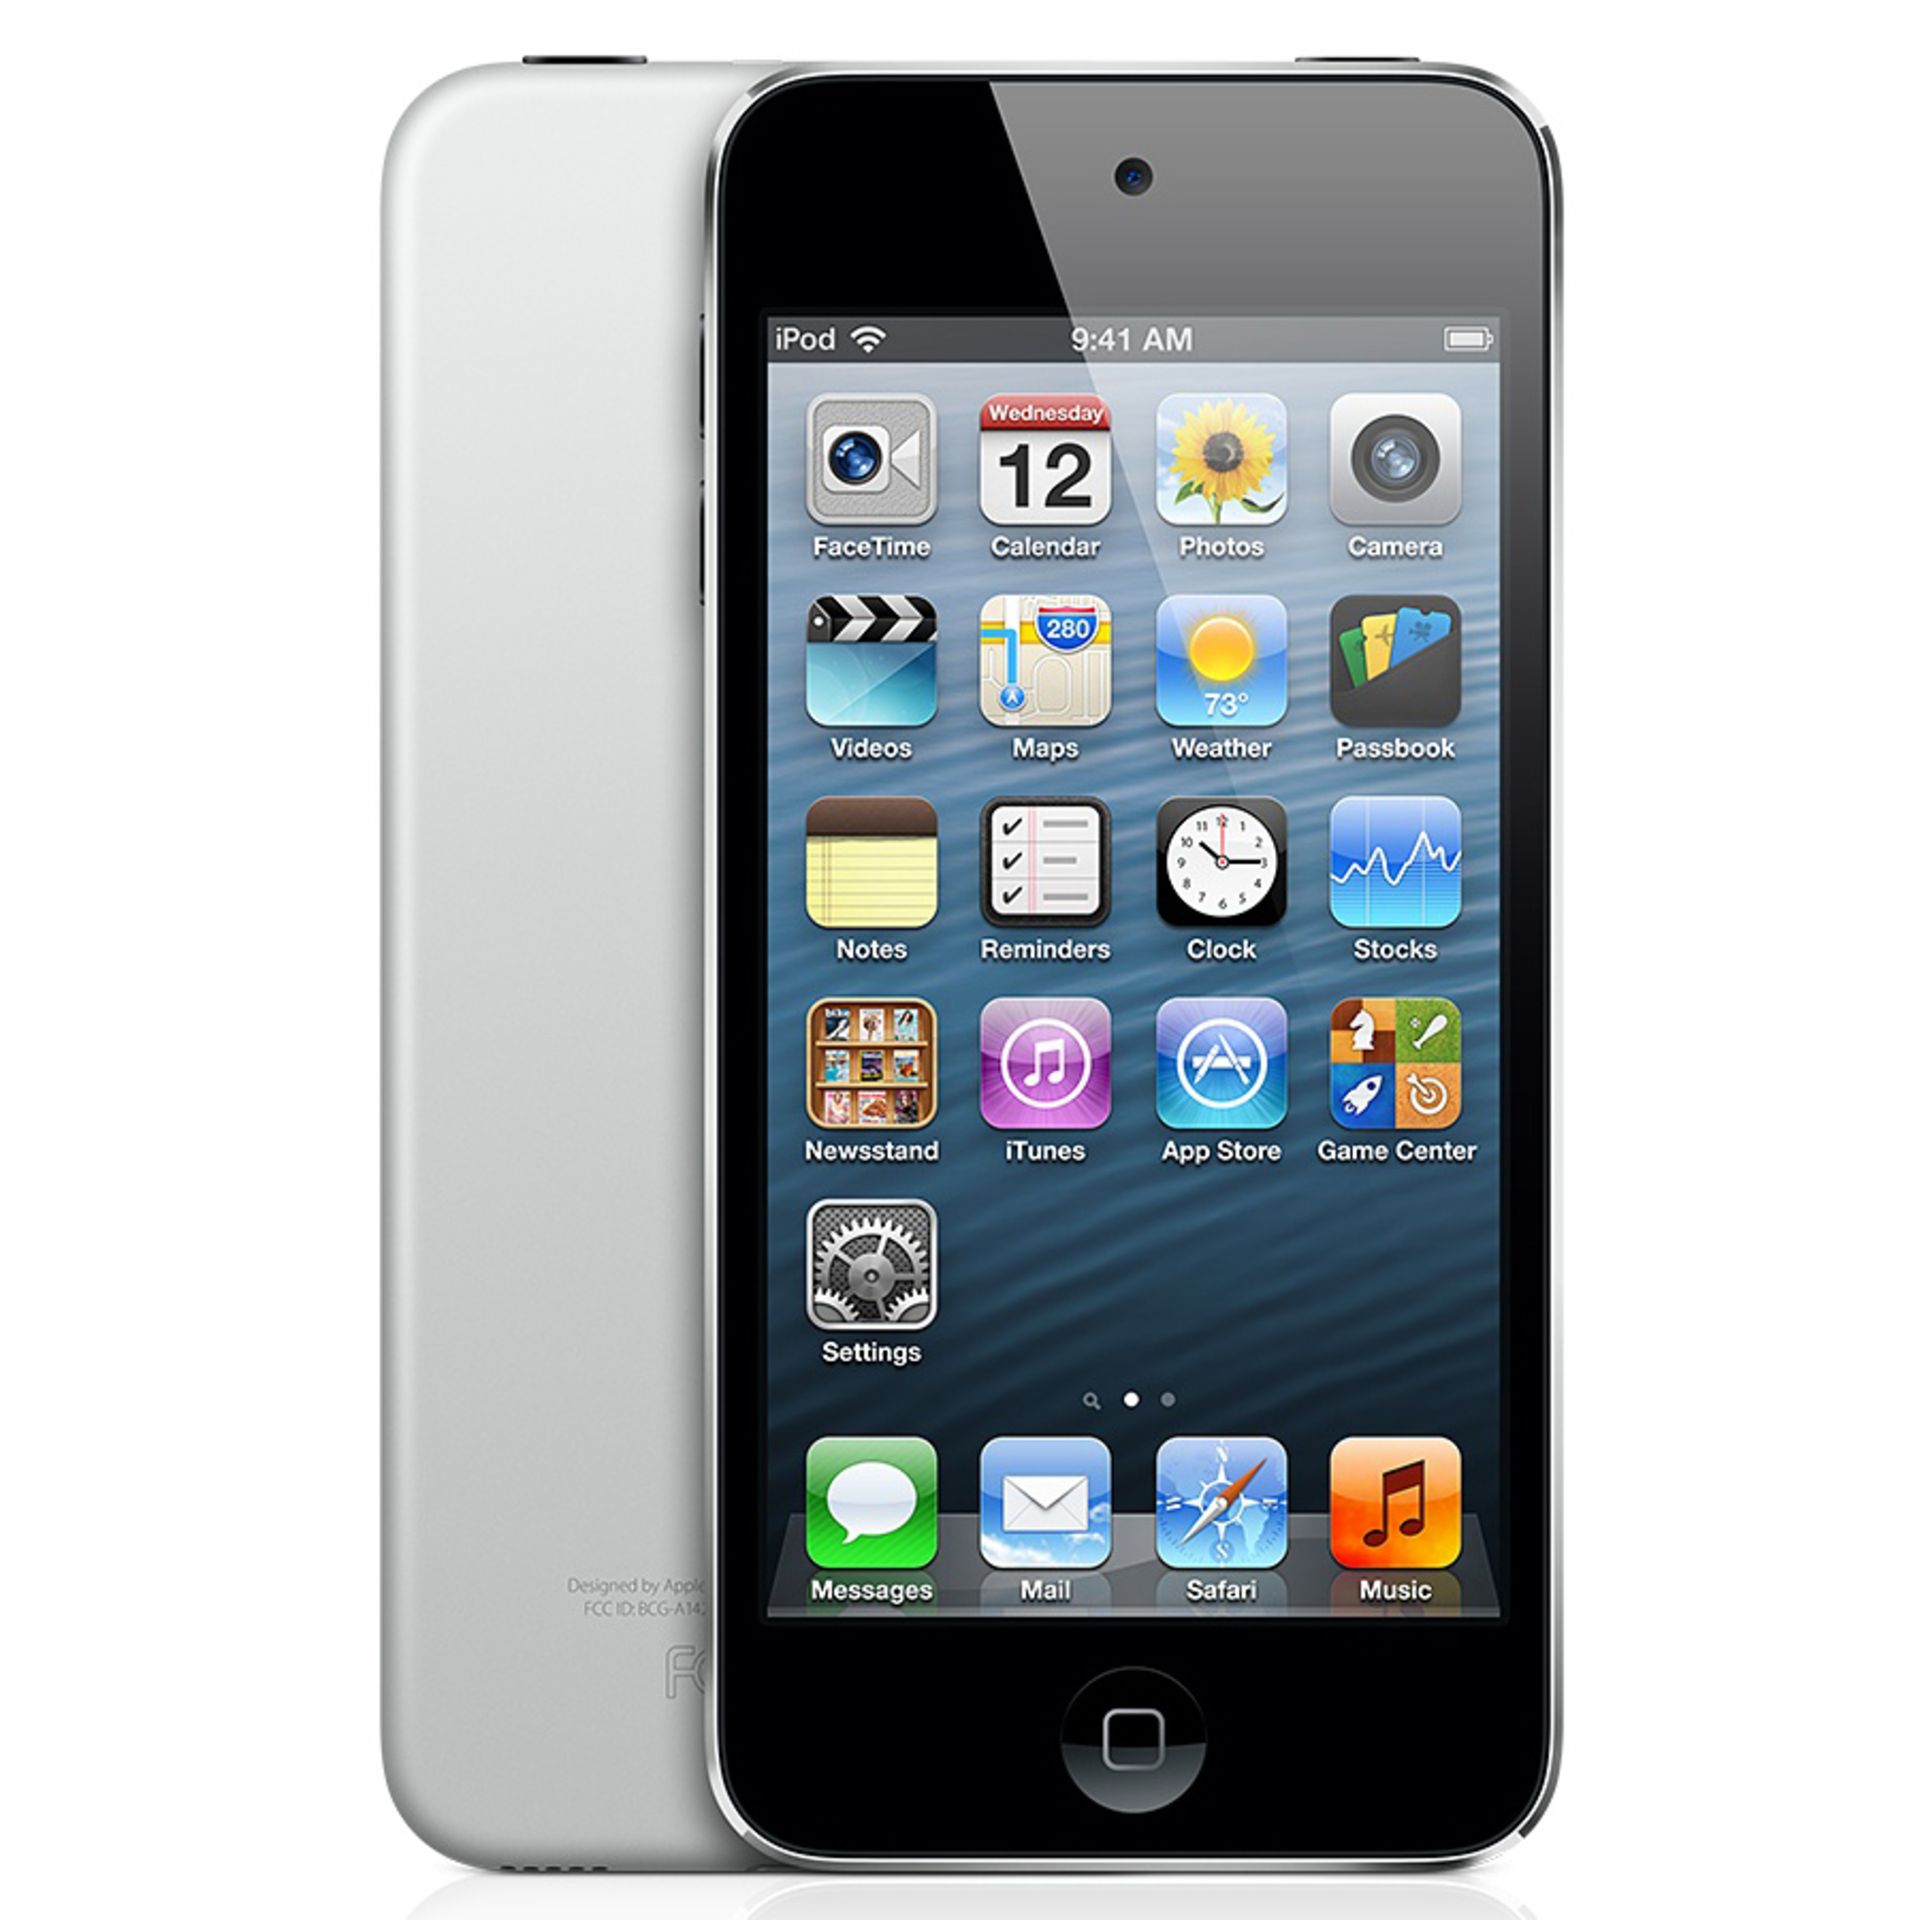 V Grade A Apple iPod touch 5th Generation - 16 GB - Black & Silver